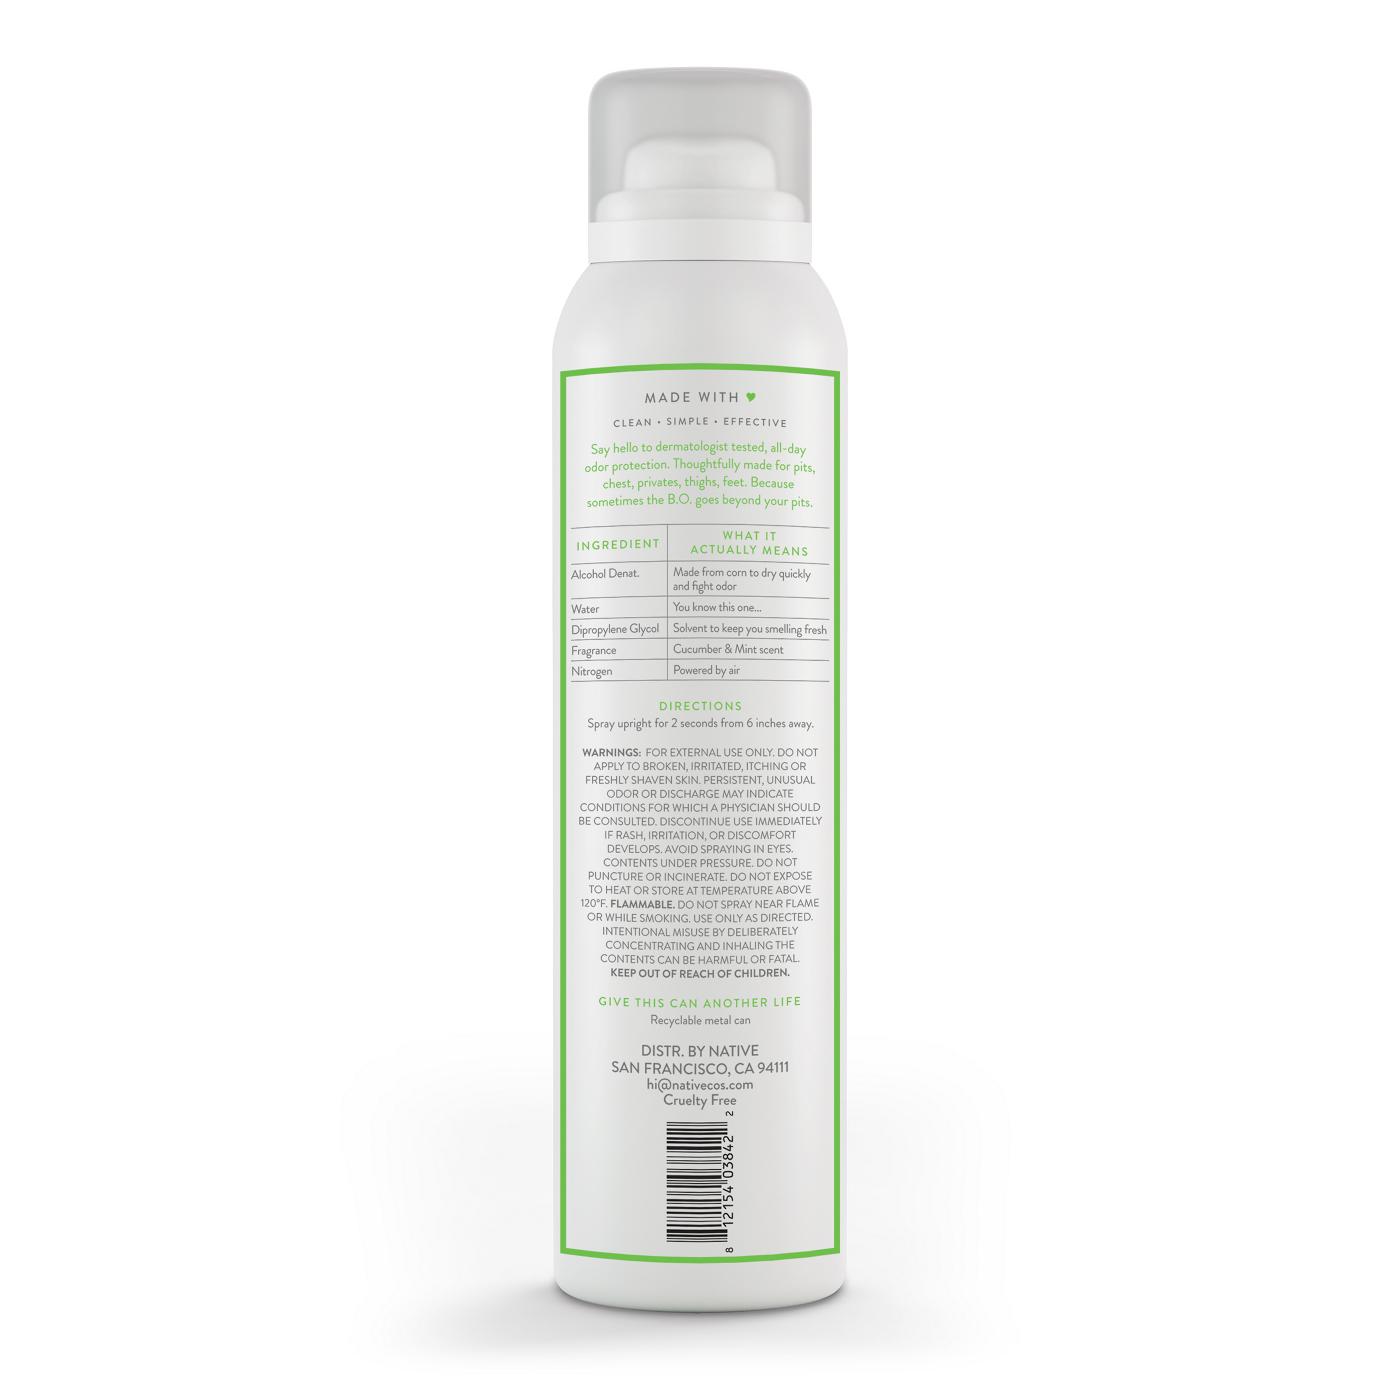 Native Whole Body Spray Deodorant - Cucumber Mint; image 2 of 2